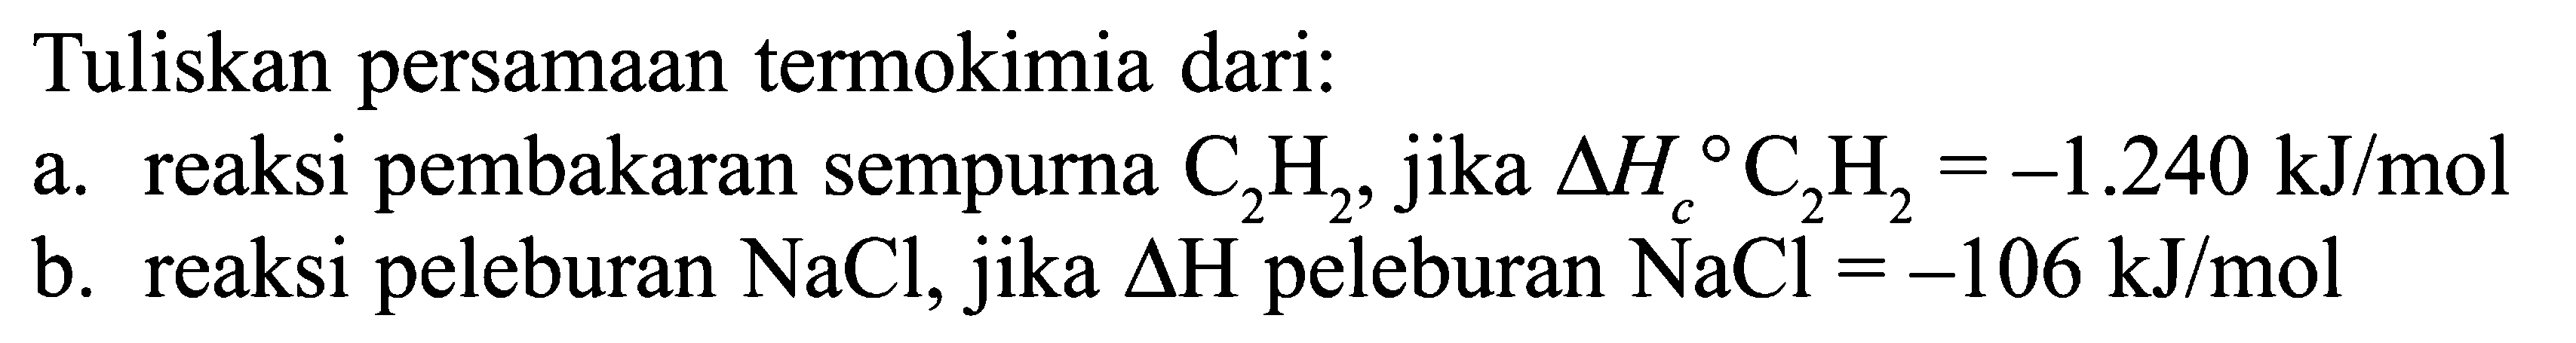 Tuliskan persamaan termokimia dari: a. reaksi pembakaran sempurna C2H2 , jika delta Hc C2H2 = -1.240 kJ/mol b. reaksi peleburan NaCl, jika delta H peleburan NaCl = -106 kJ/mol